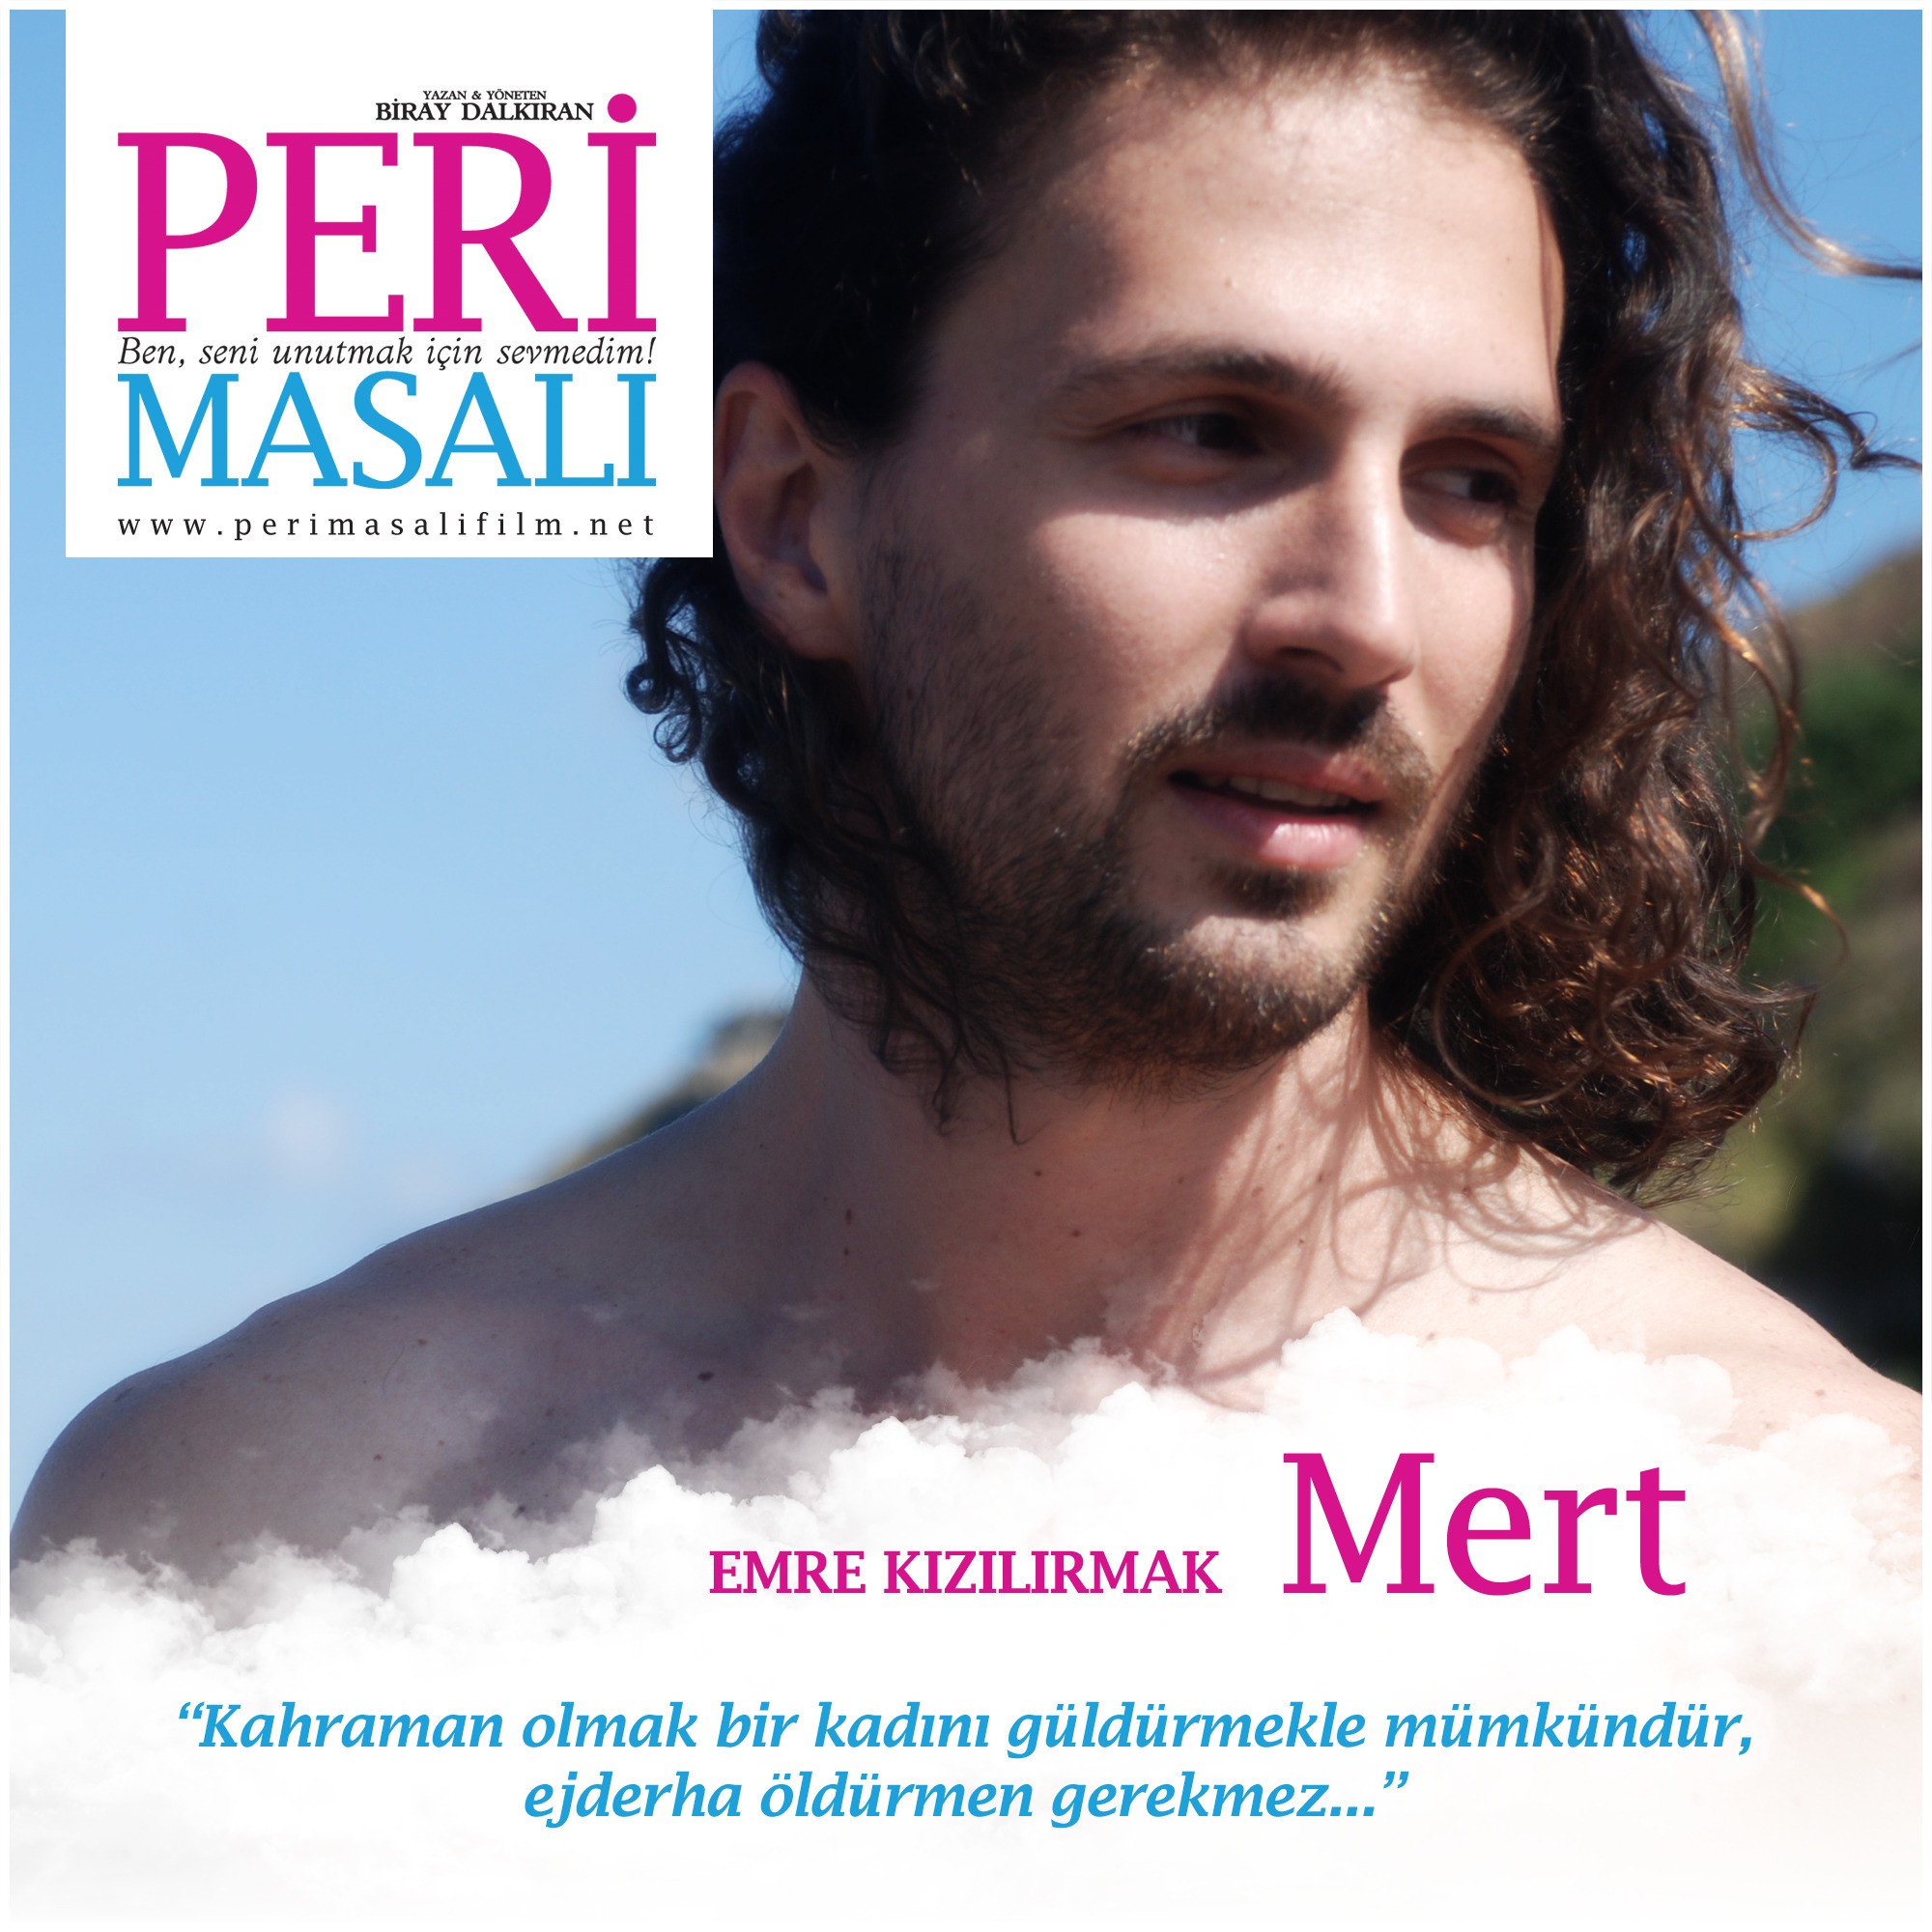 Mega Sized Movie Poster Image for Peri Masali (#6 of 9)